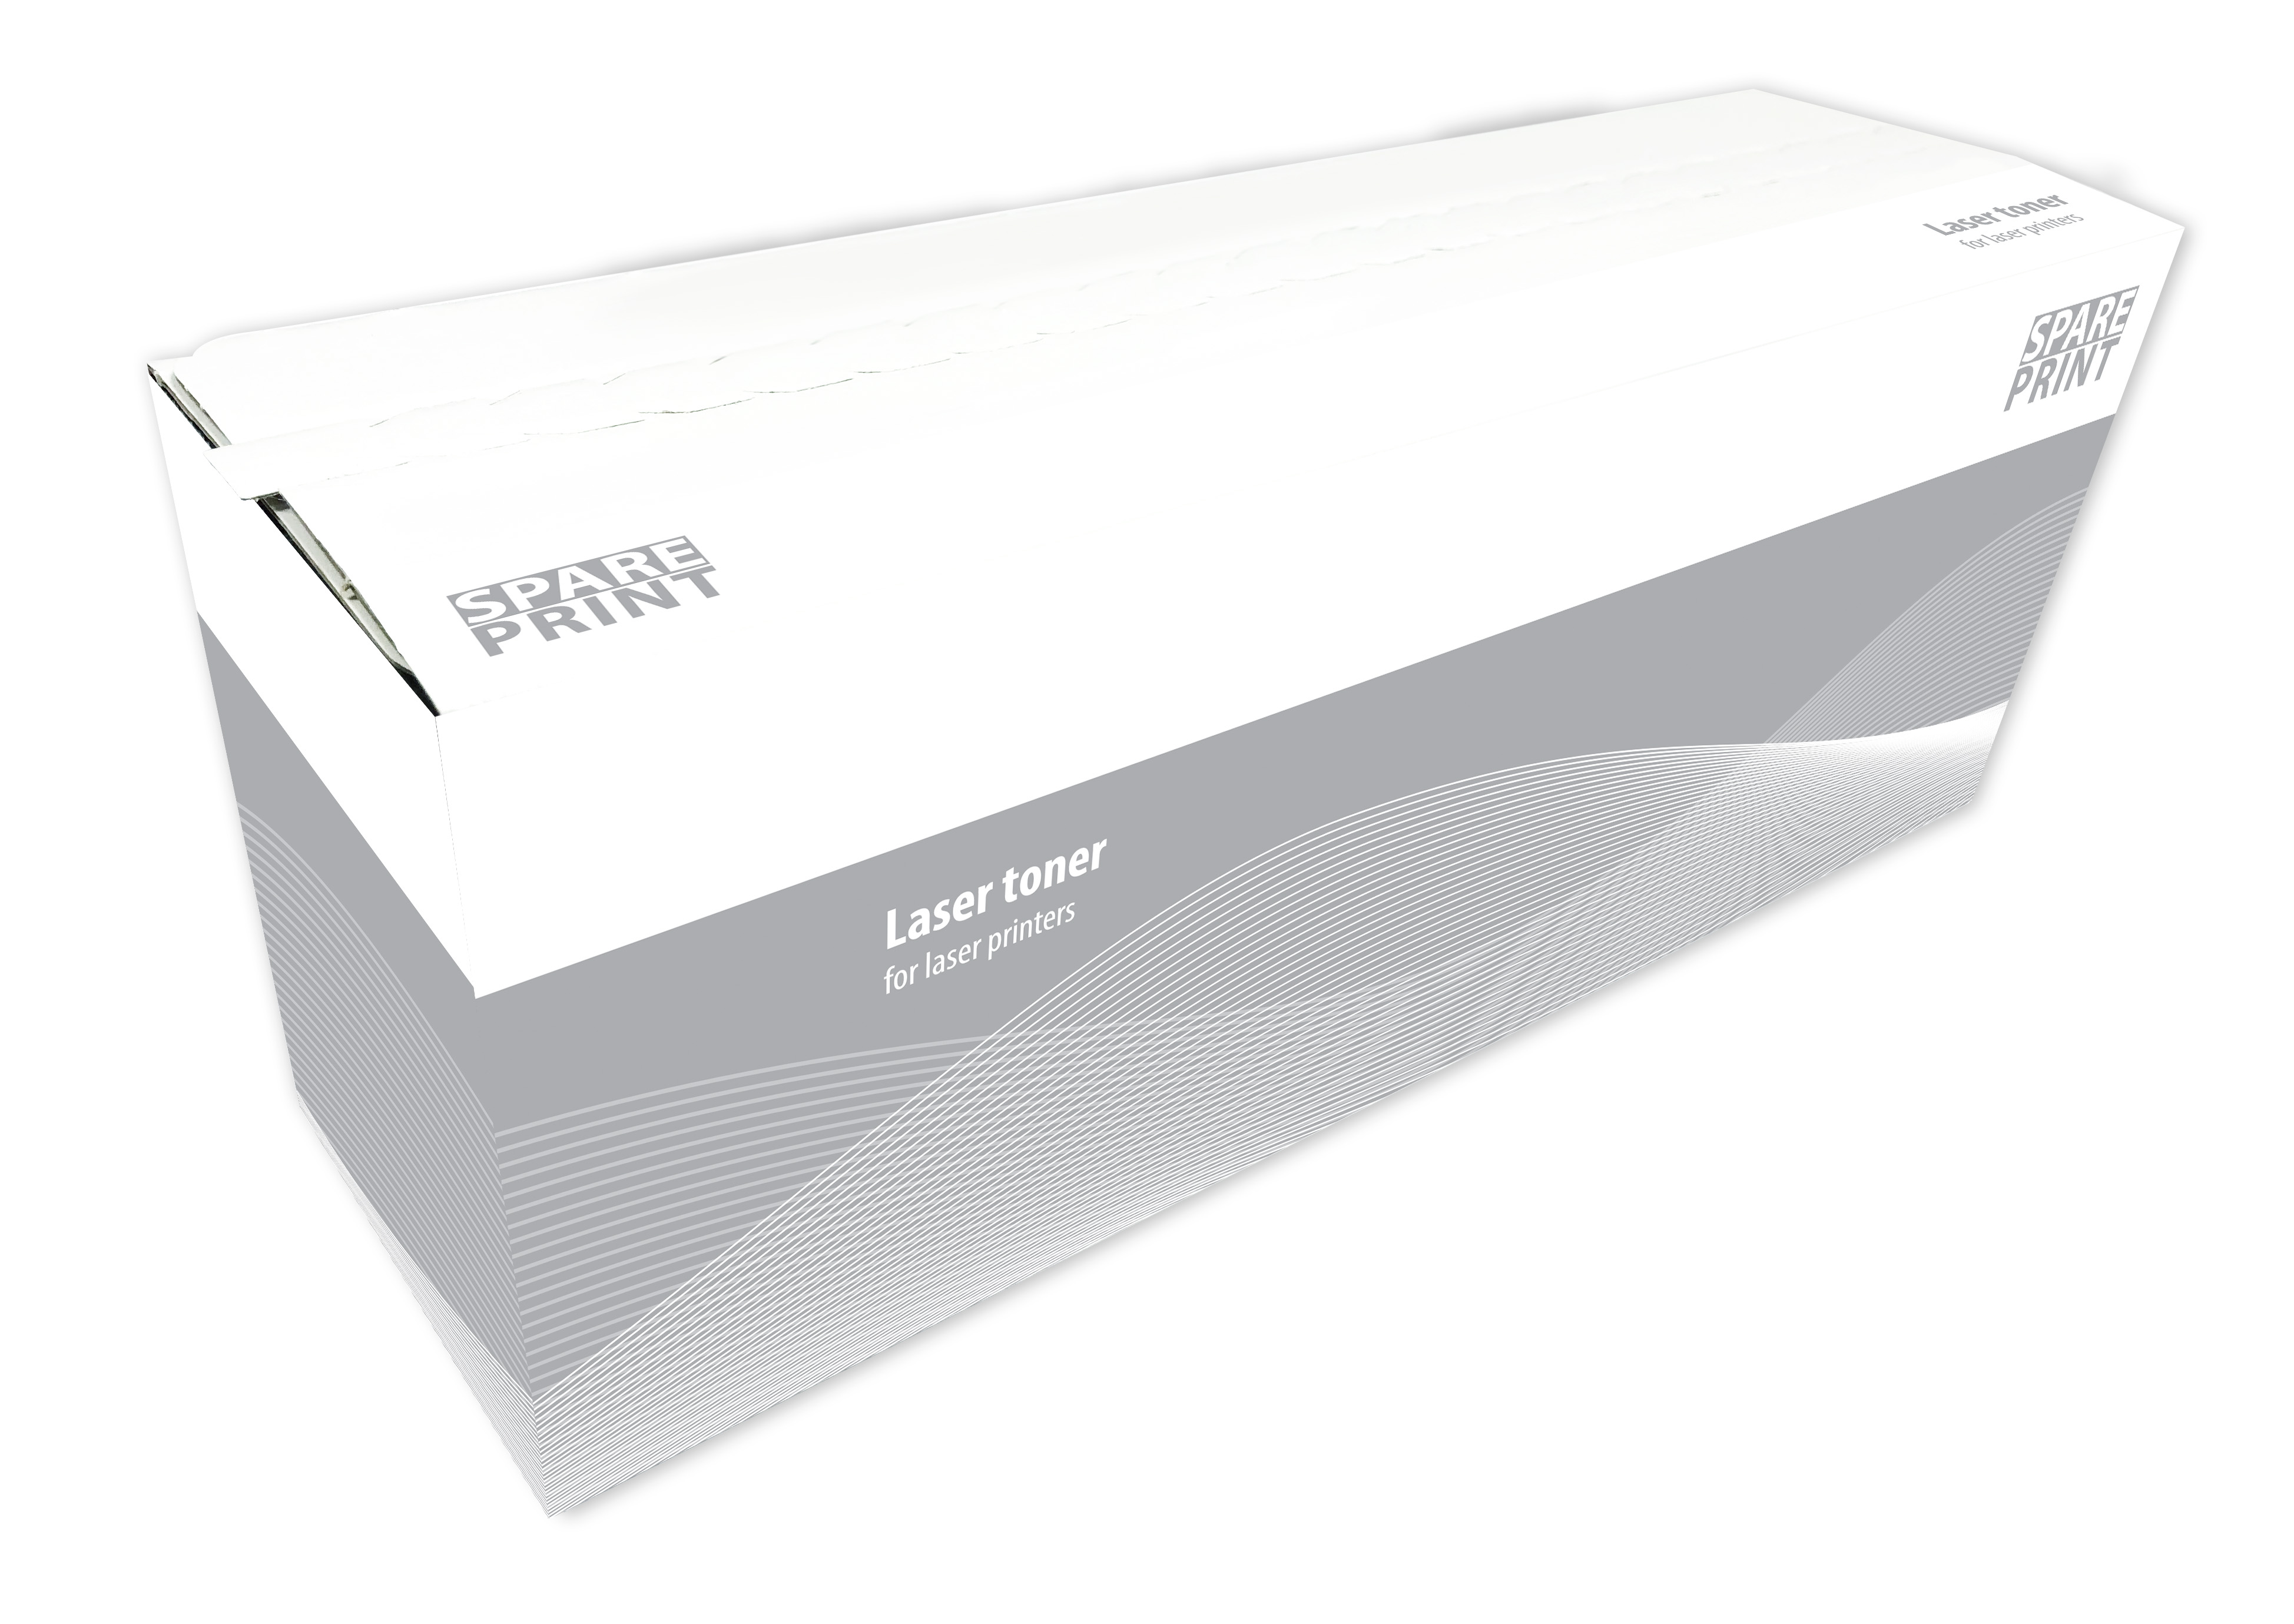 SPARE PRINT kompatibilní toner 106R04348 Black pro tiskárny Xerox